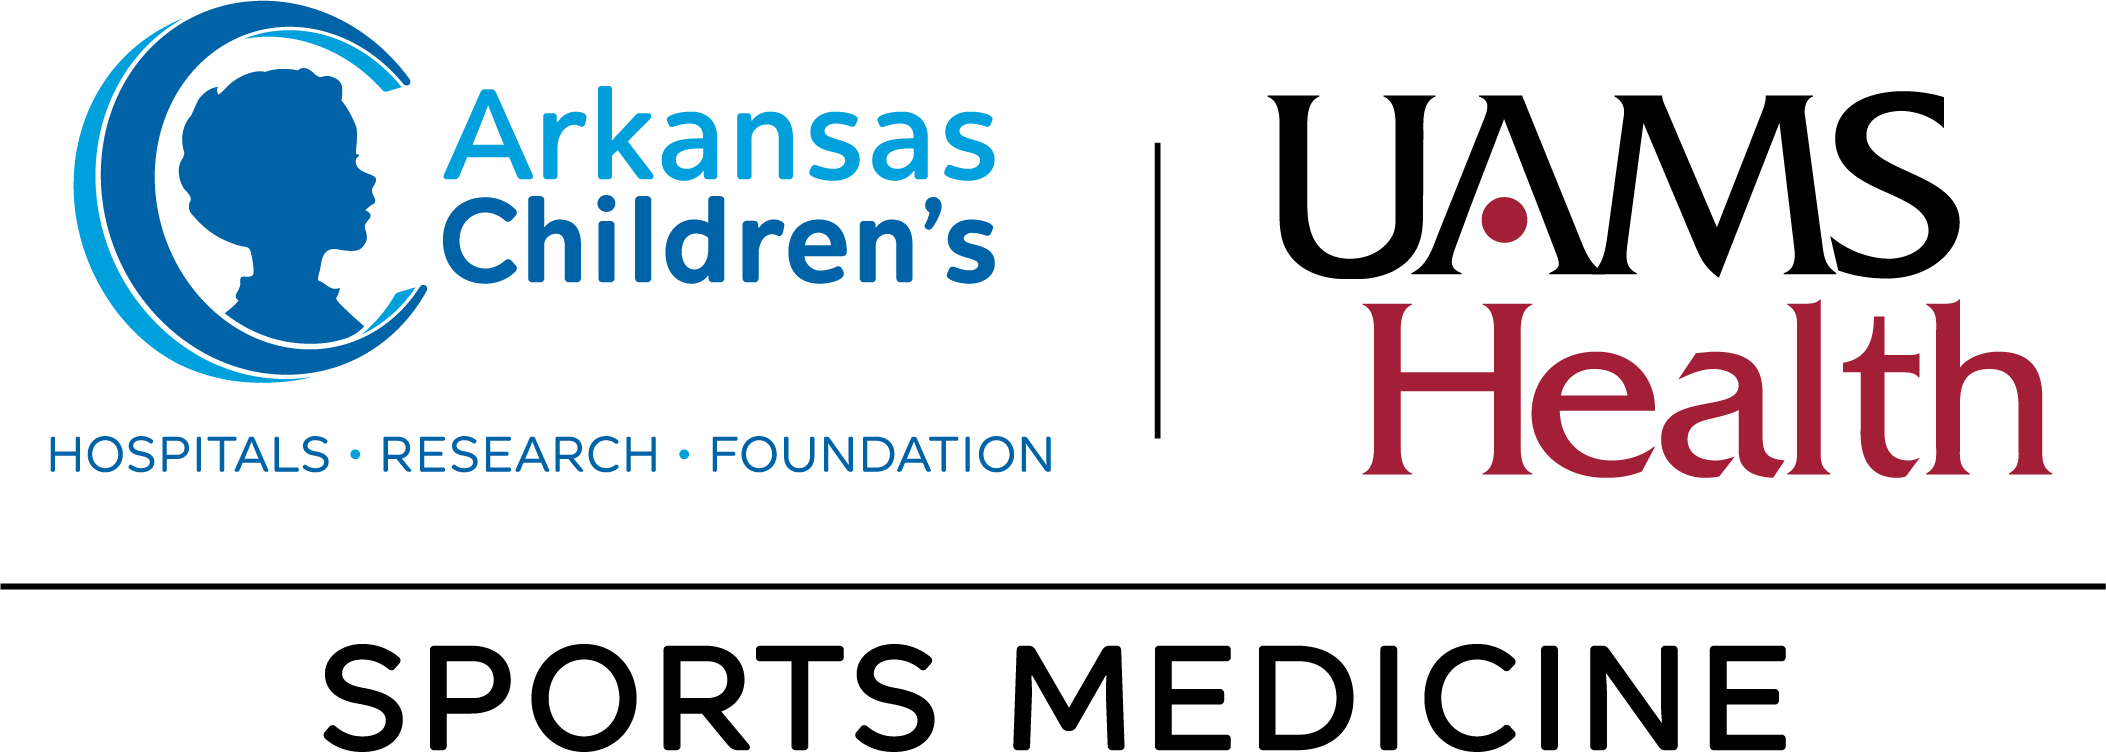 merged logos of Sports Medicine program of Arkansas Children's Hospital and UAMS Health